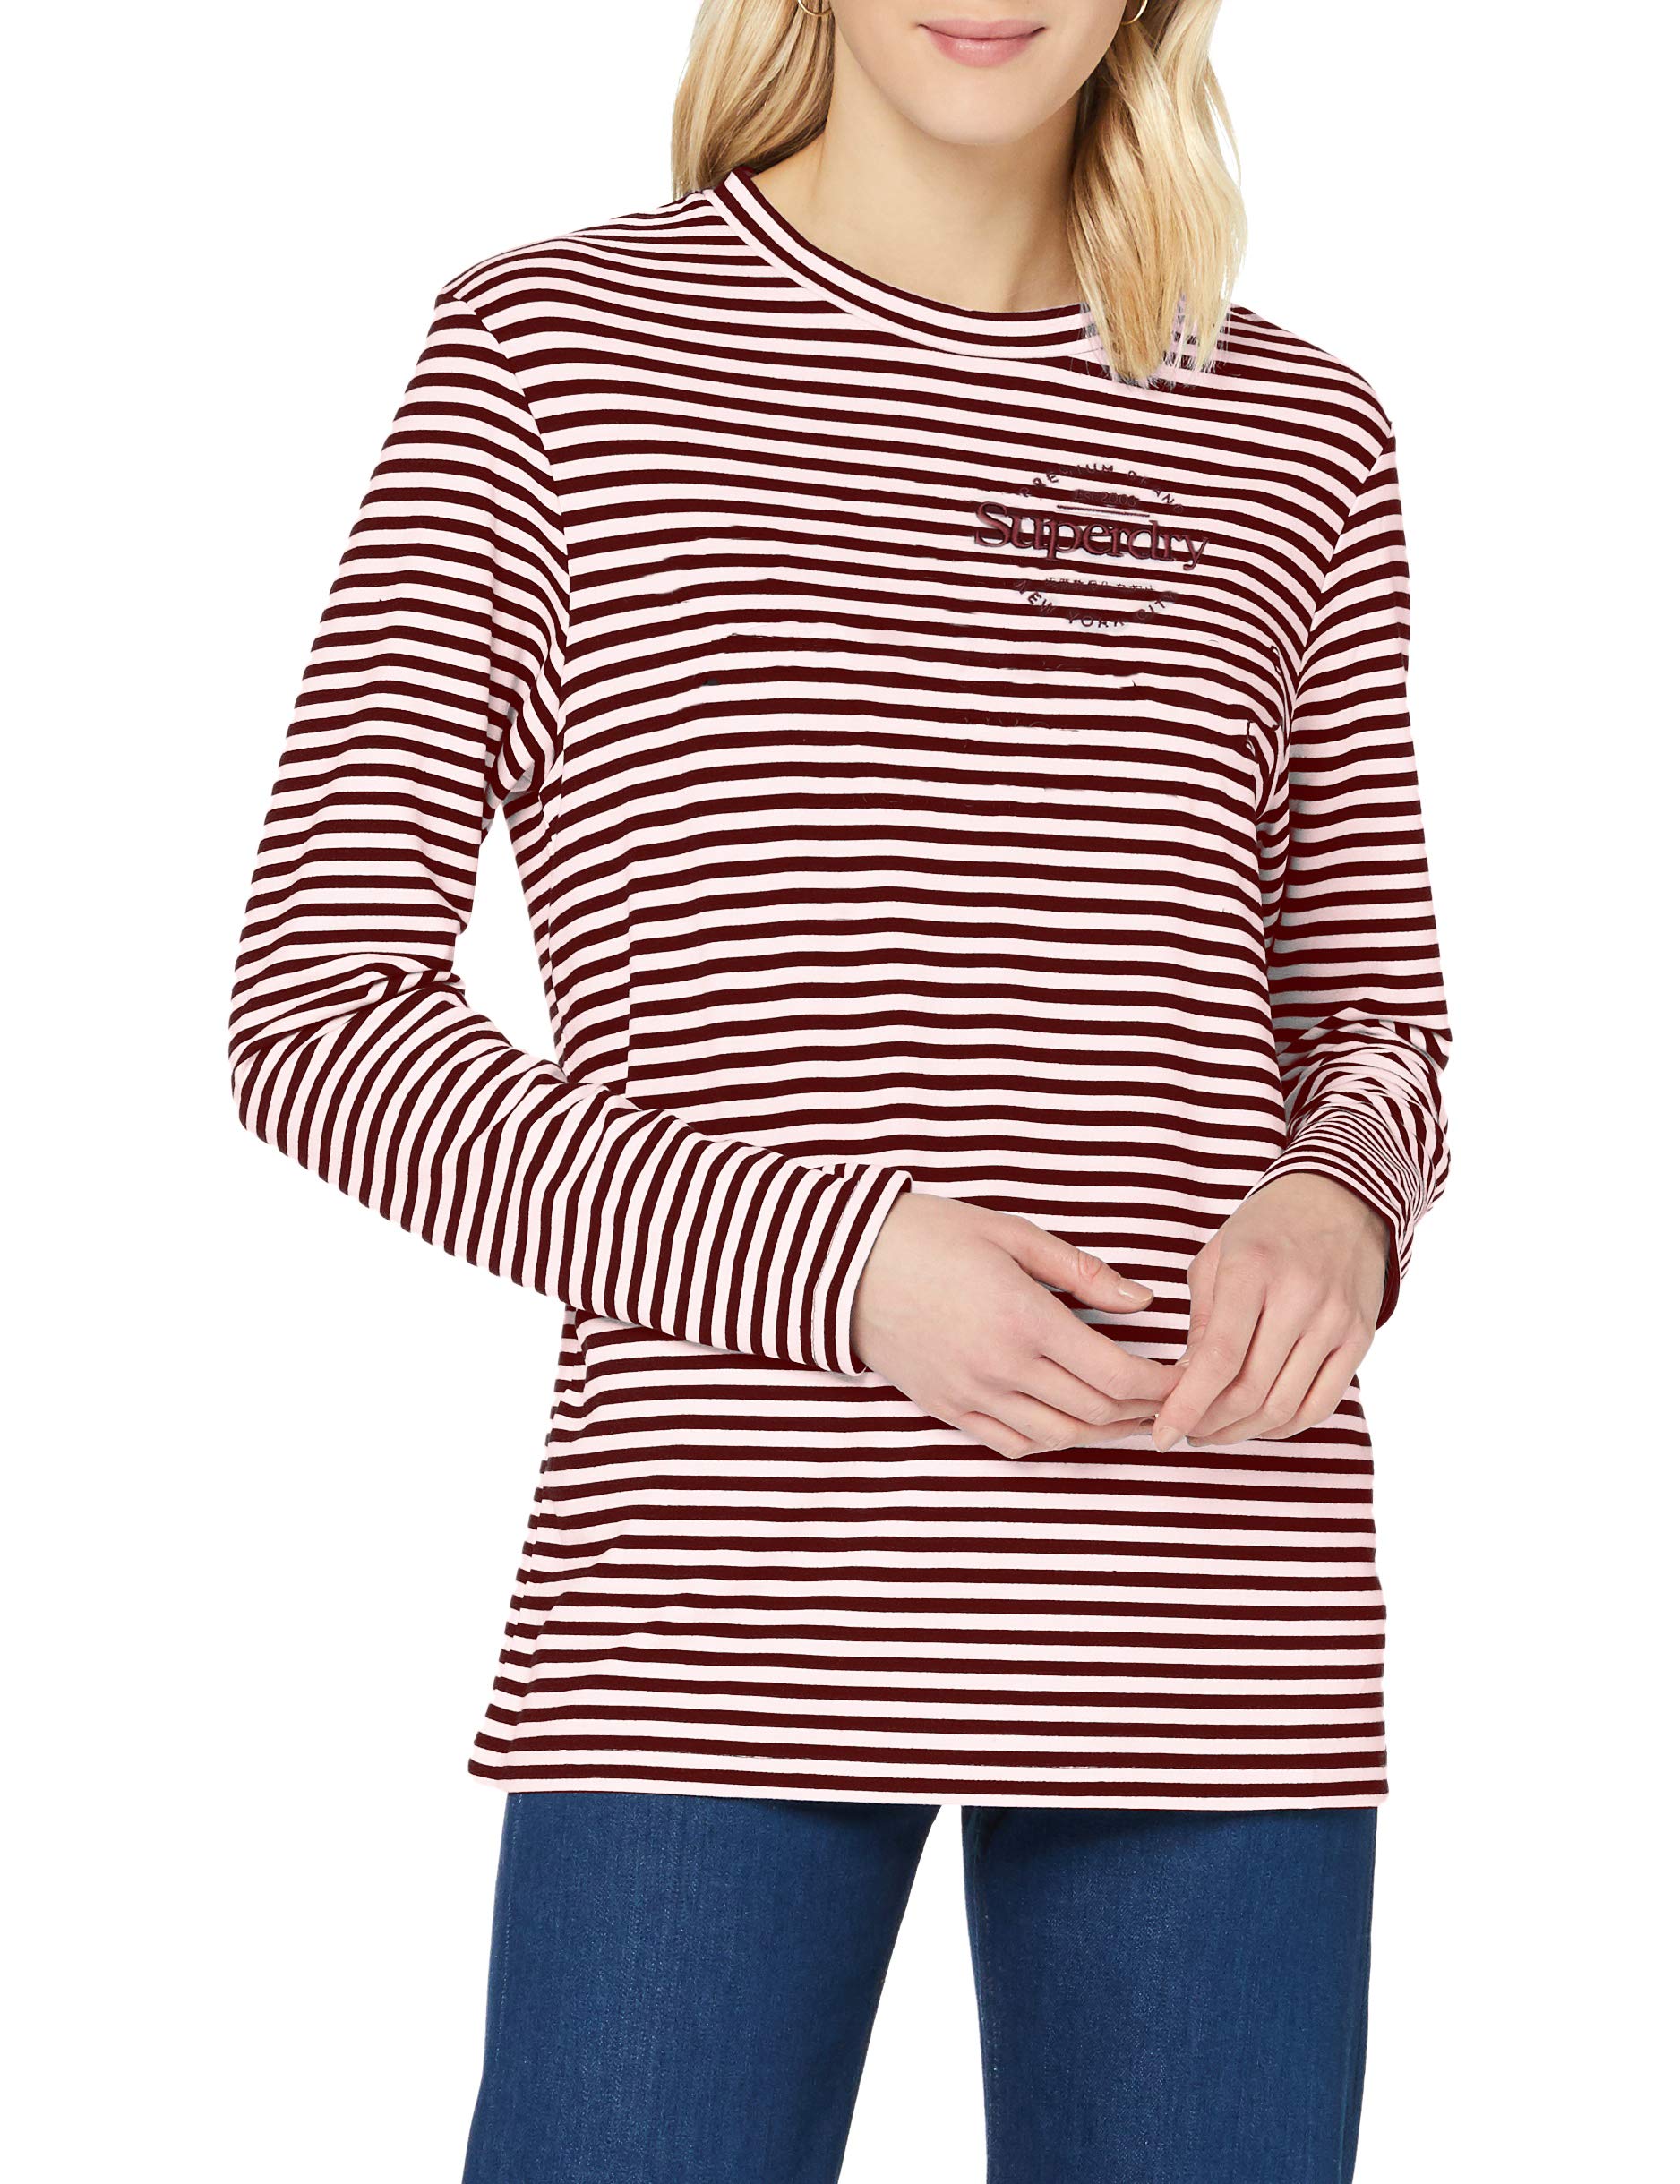 Superdry Damen Stripe Graphic Nyc Top T Shirt, Deep Port Stripe, 40 EU